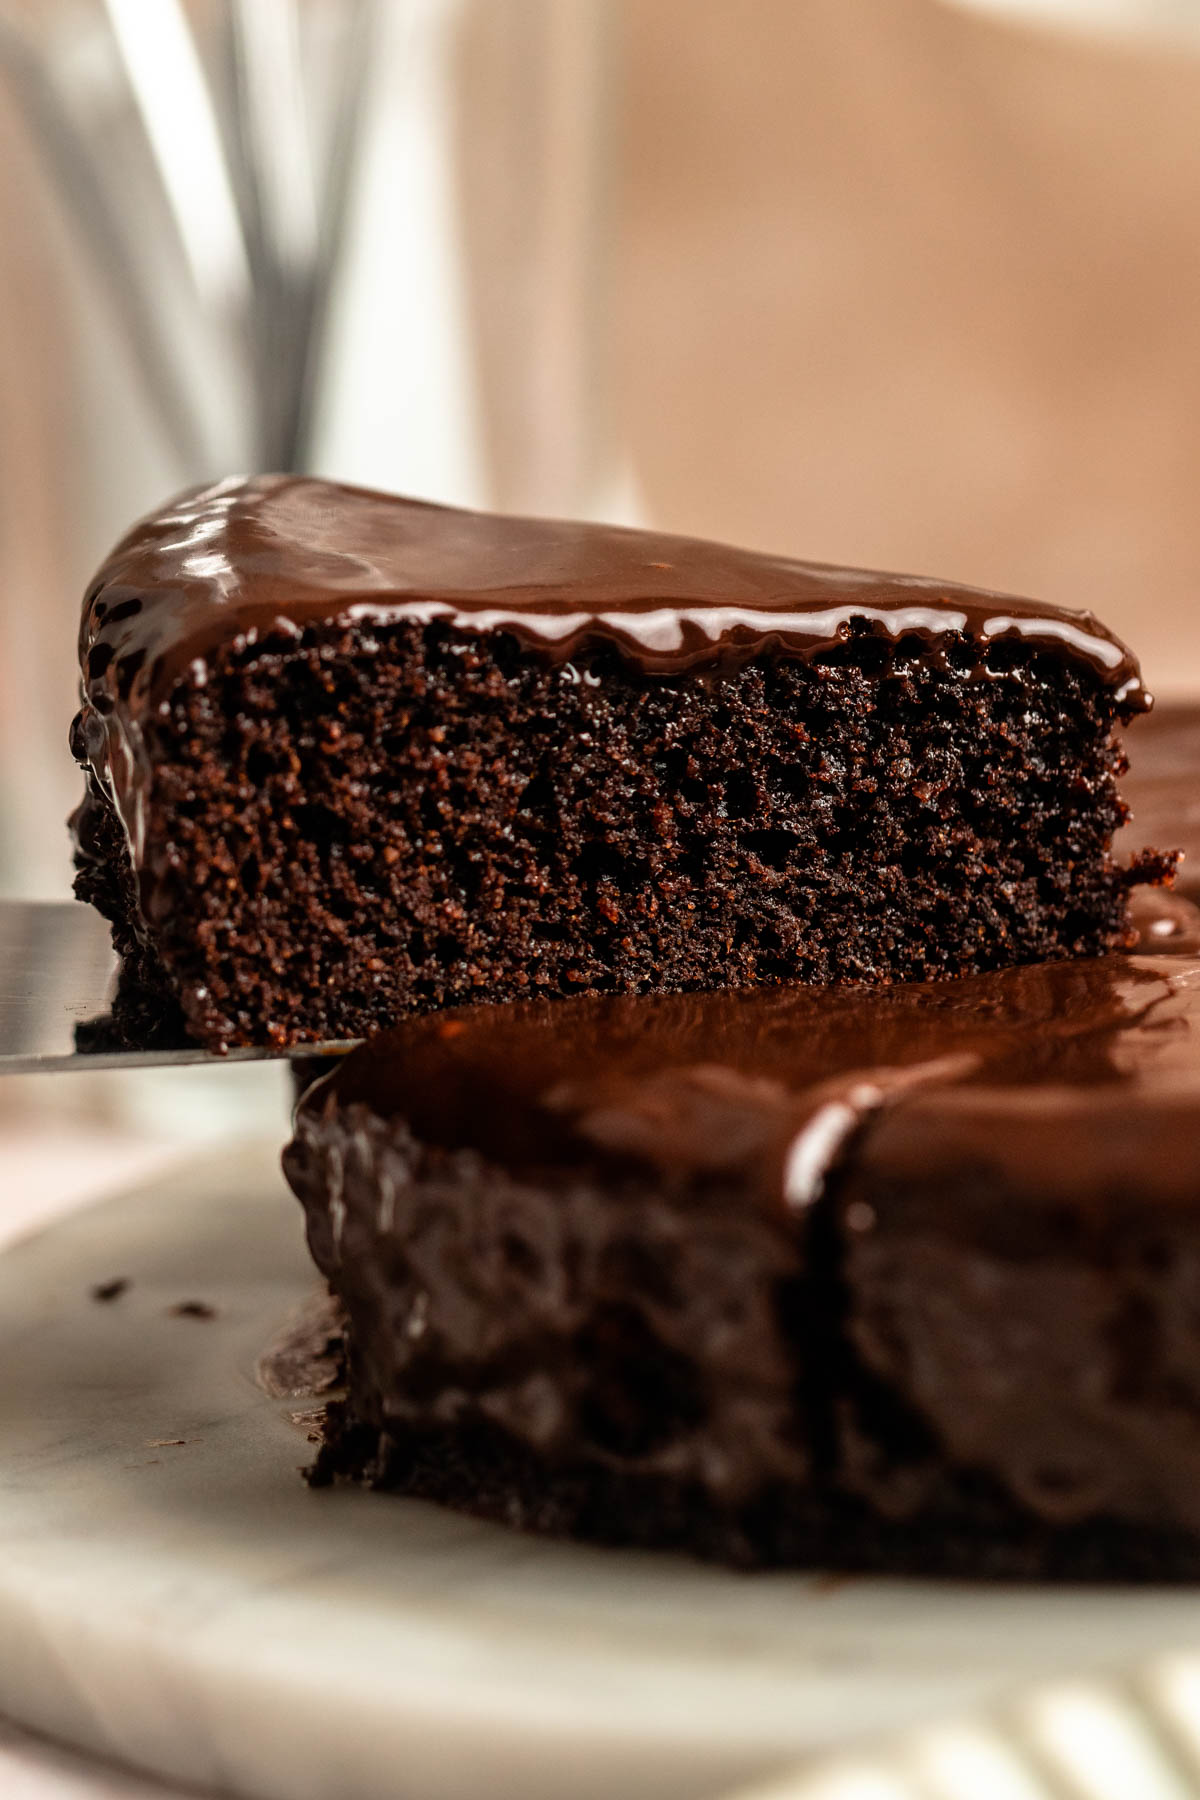 Close up shot of a slice of almond flour chocolate cake.